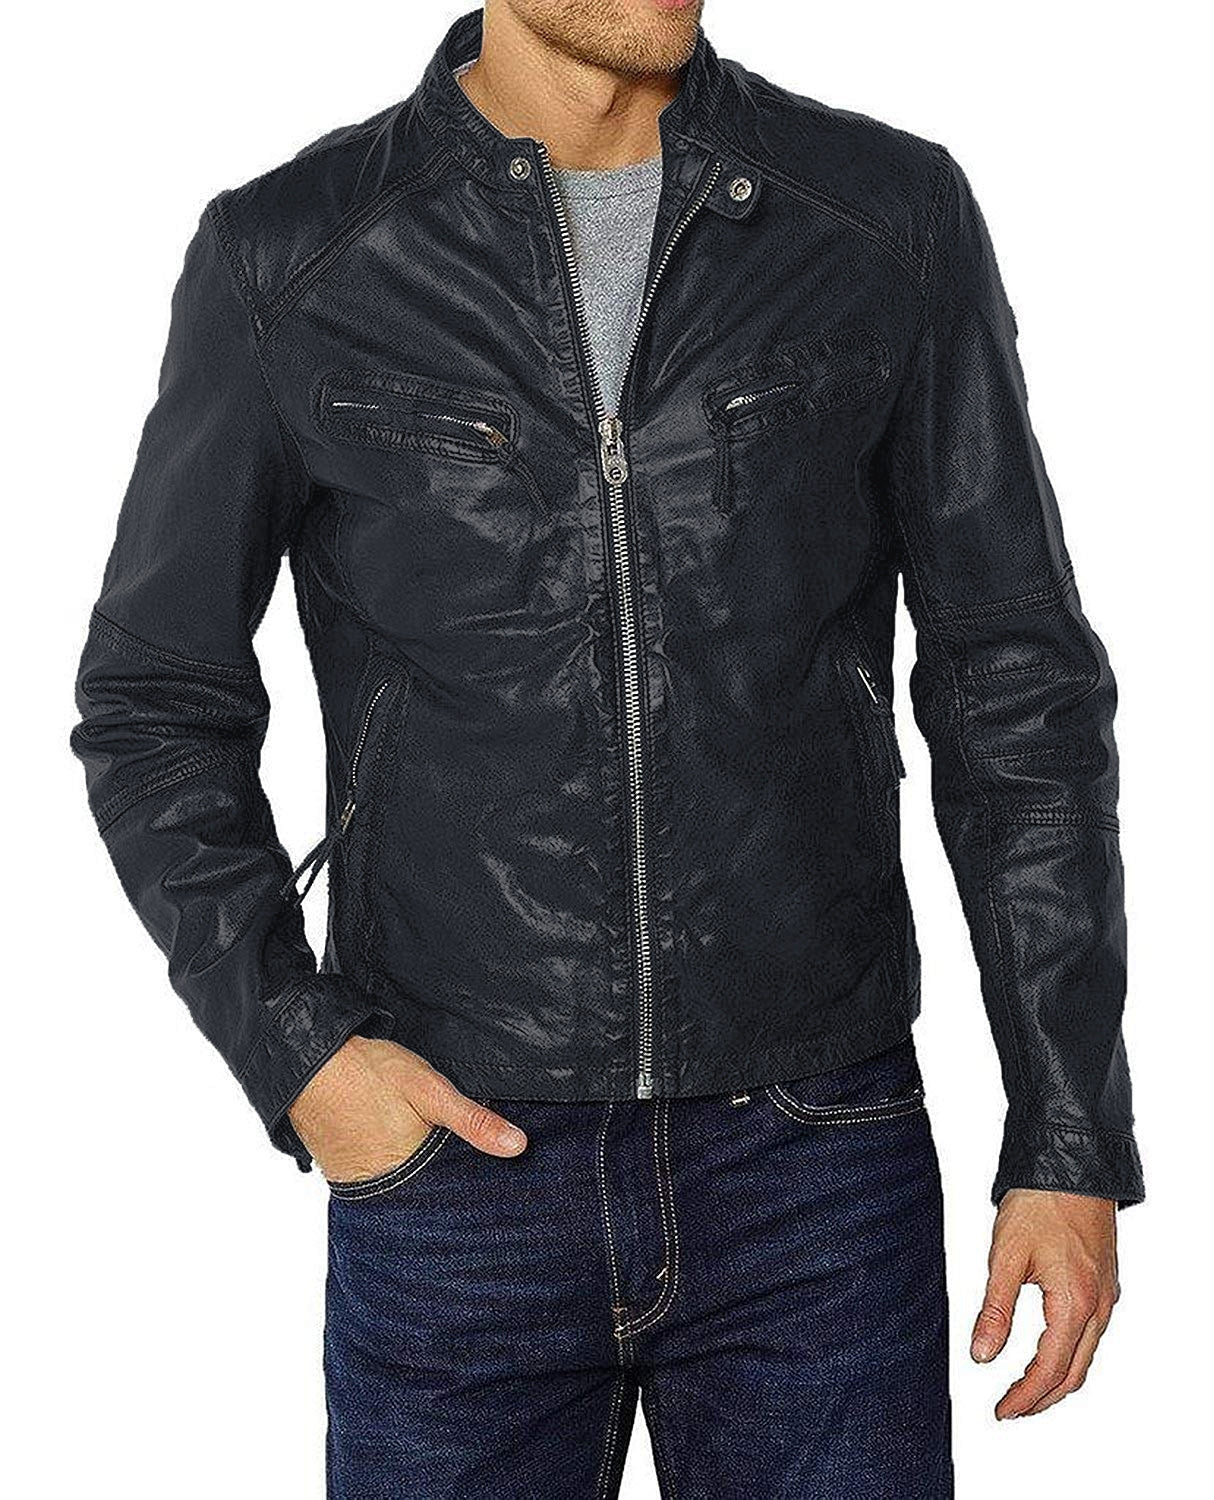 Leather Jackets Hub Mens Genuine Lambskin Leather Jacket (Black, Racer Jacket) - 1501328